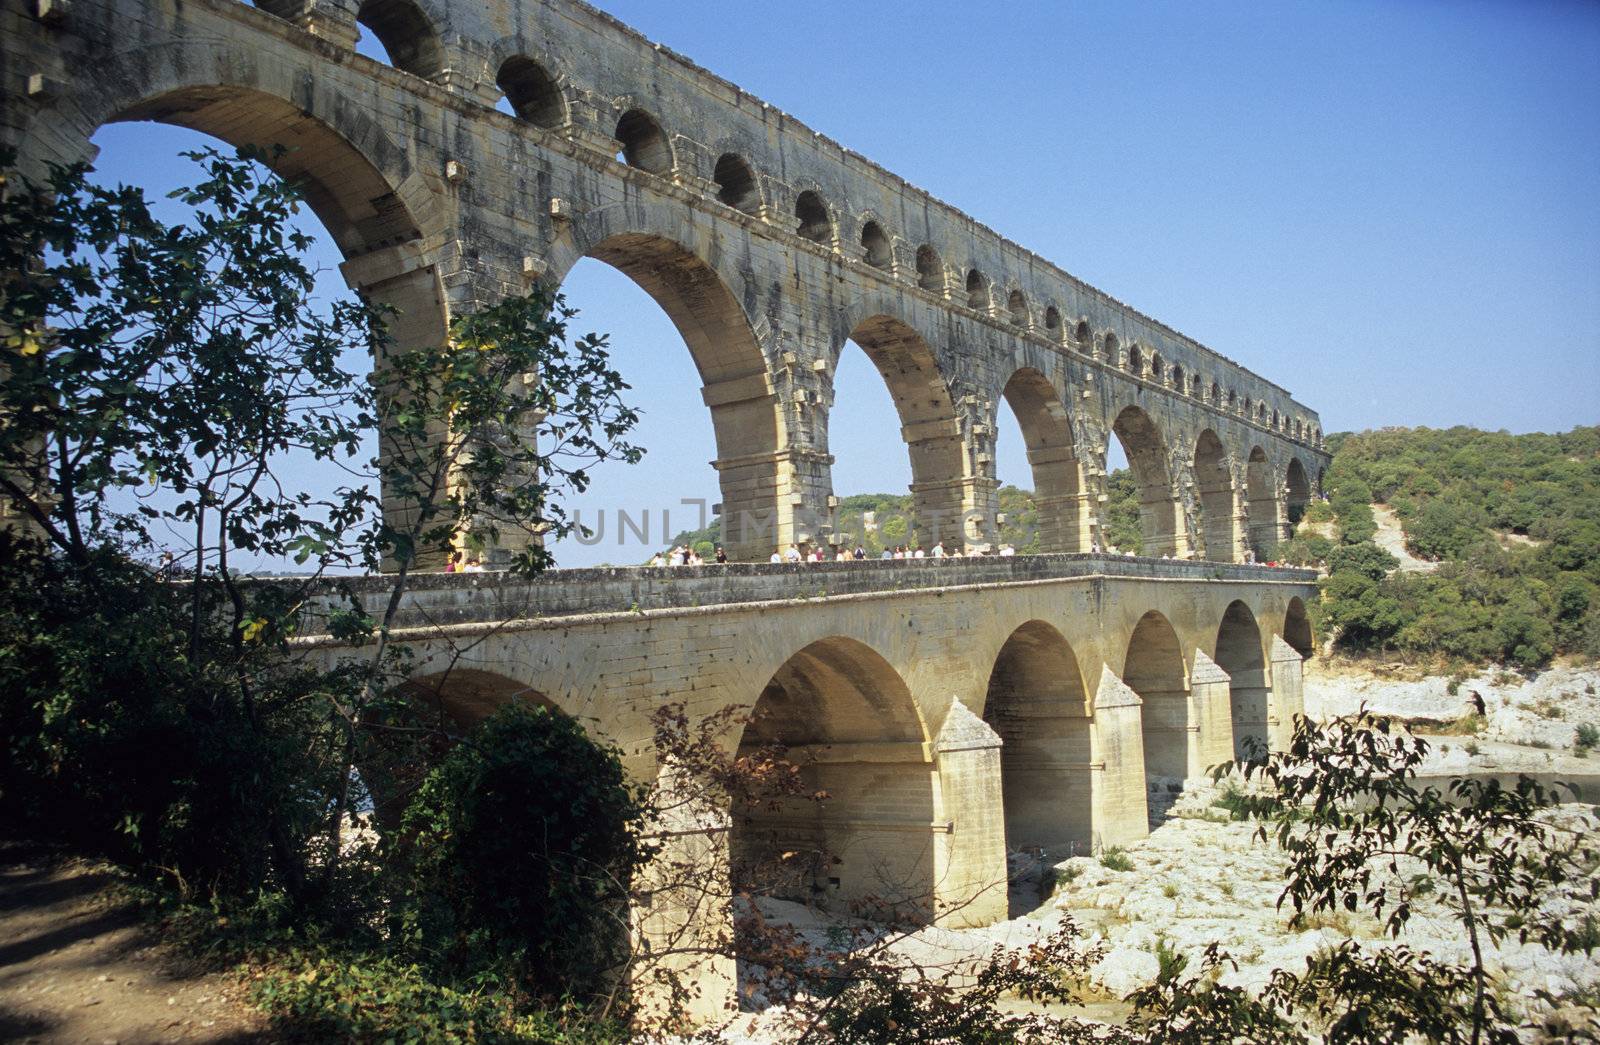 Remains of the Roman aqueduct, Pont Du Gard, near Nimes, France.